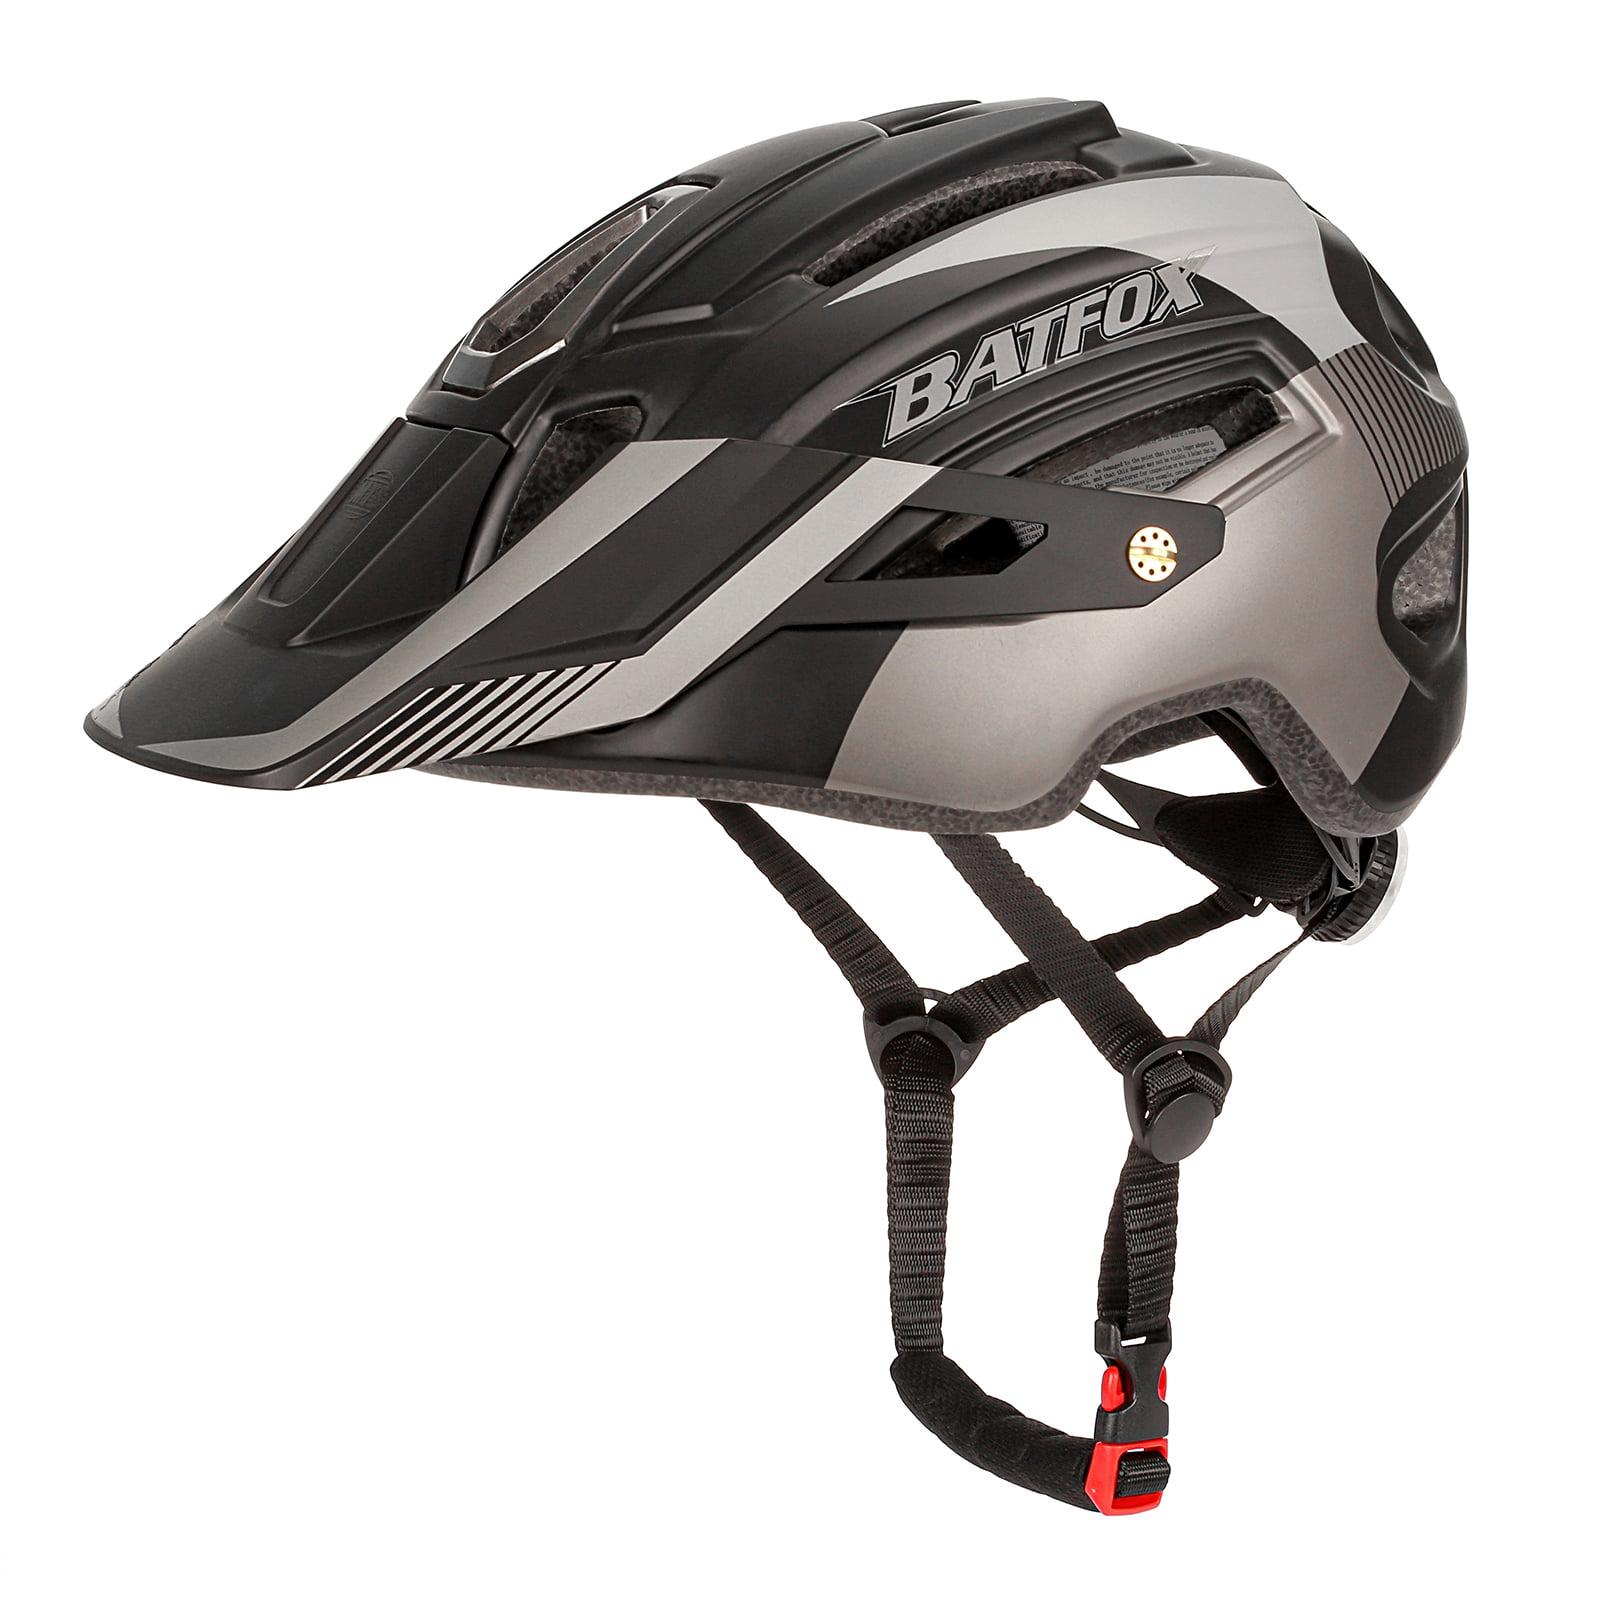 BATFOX Bicycle Helmet Black Ink Green Cycling Helmets MTB Road Mountain Bike NEW 